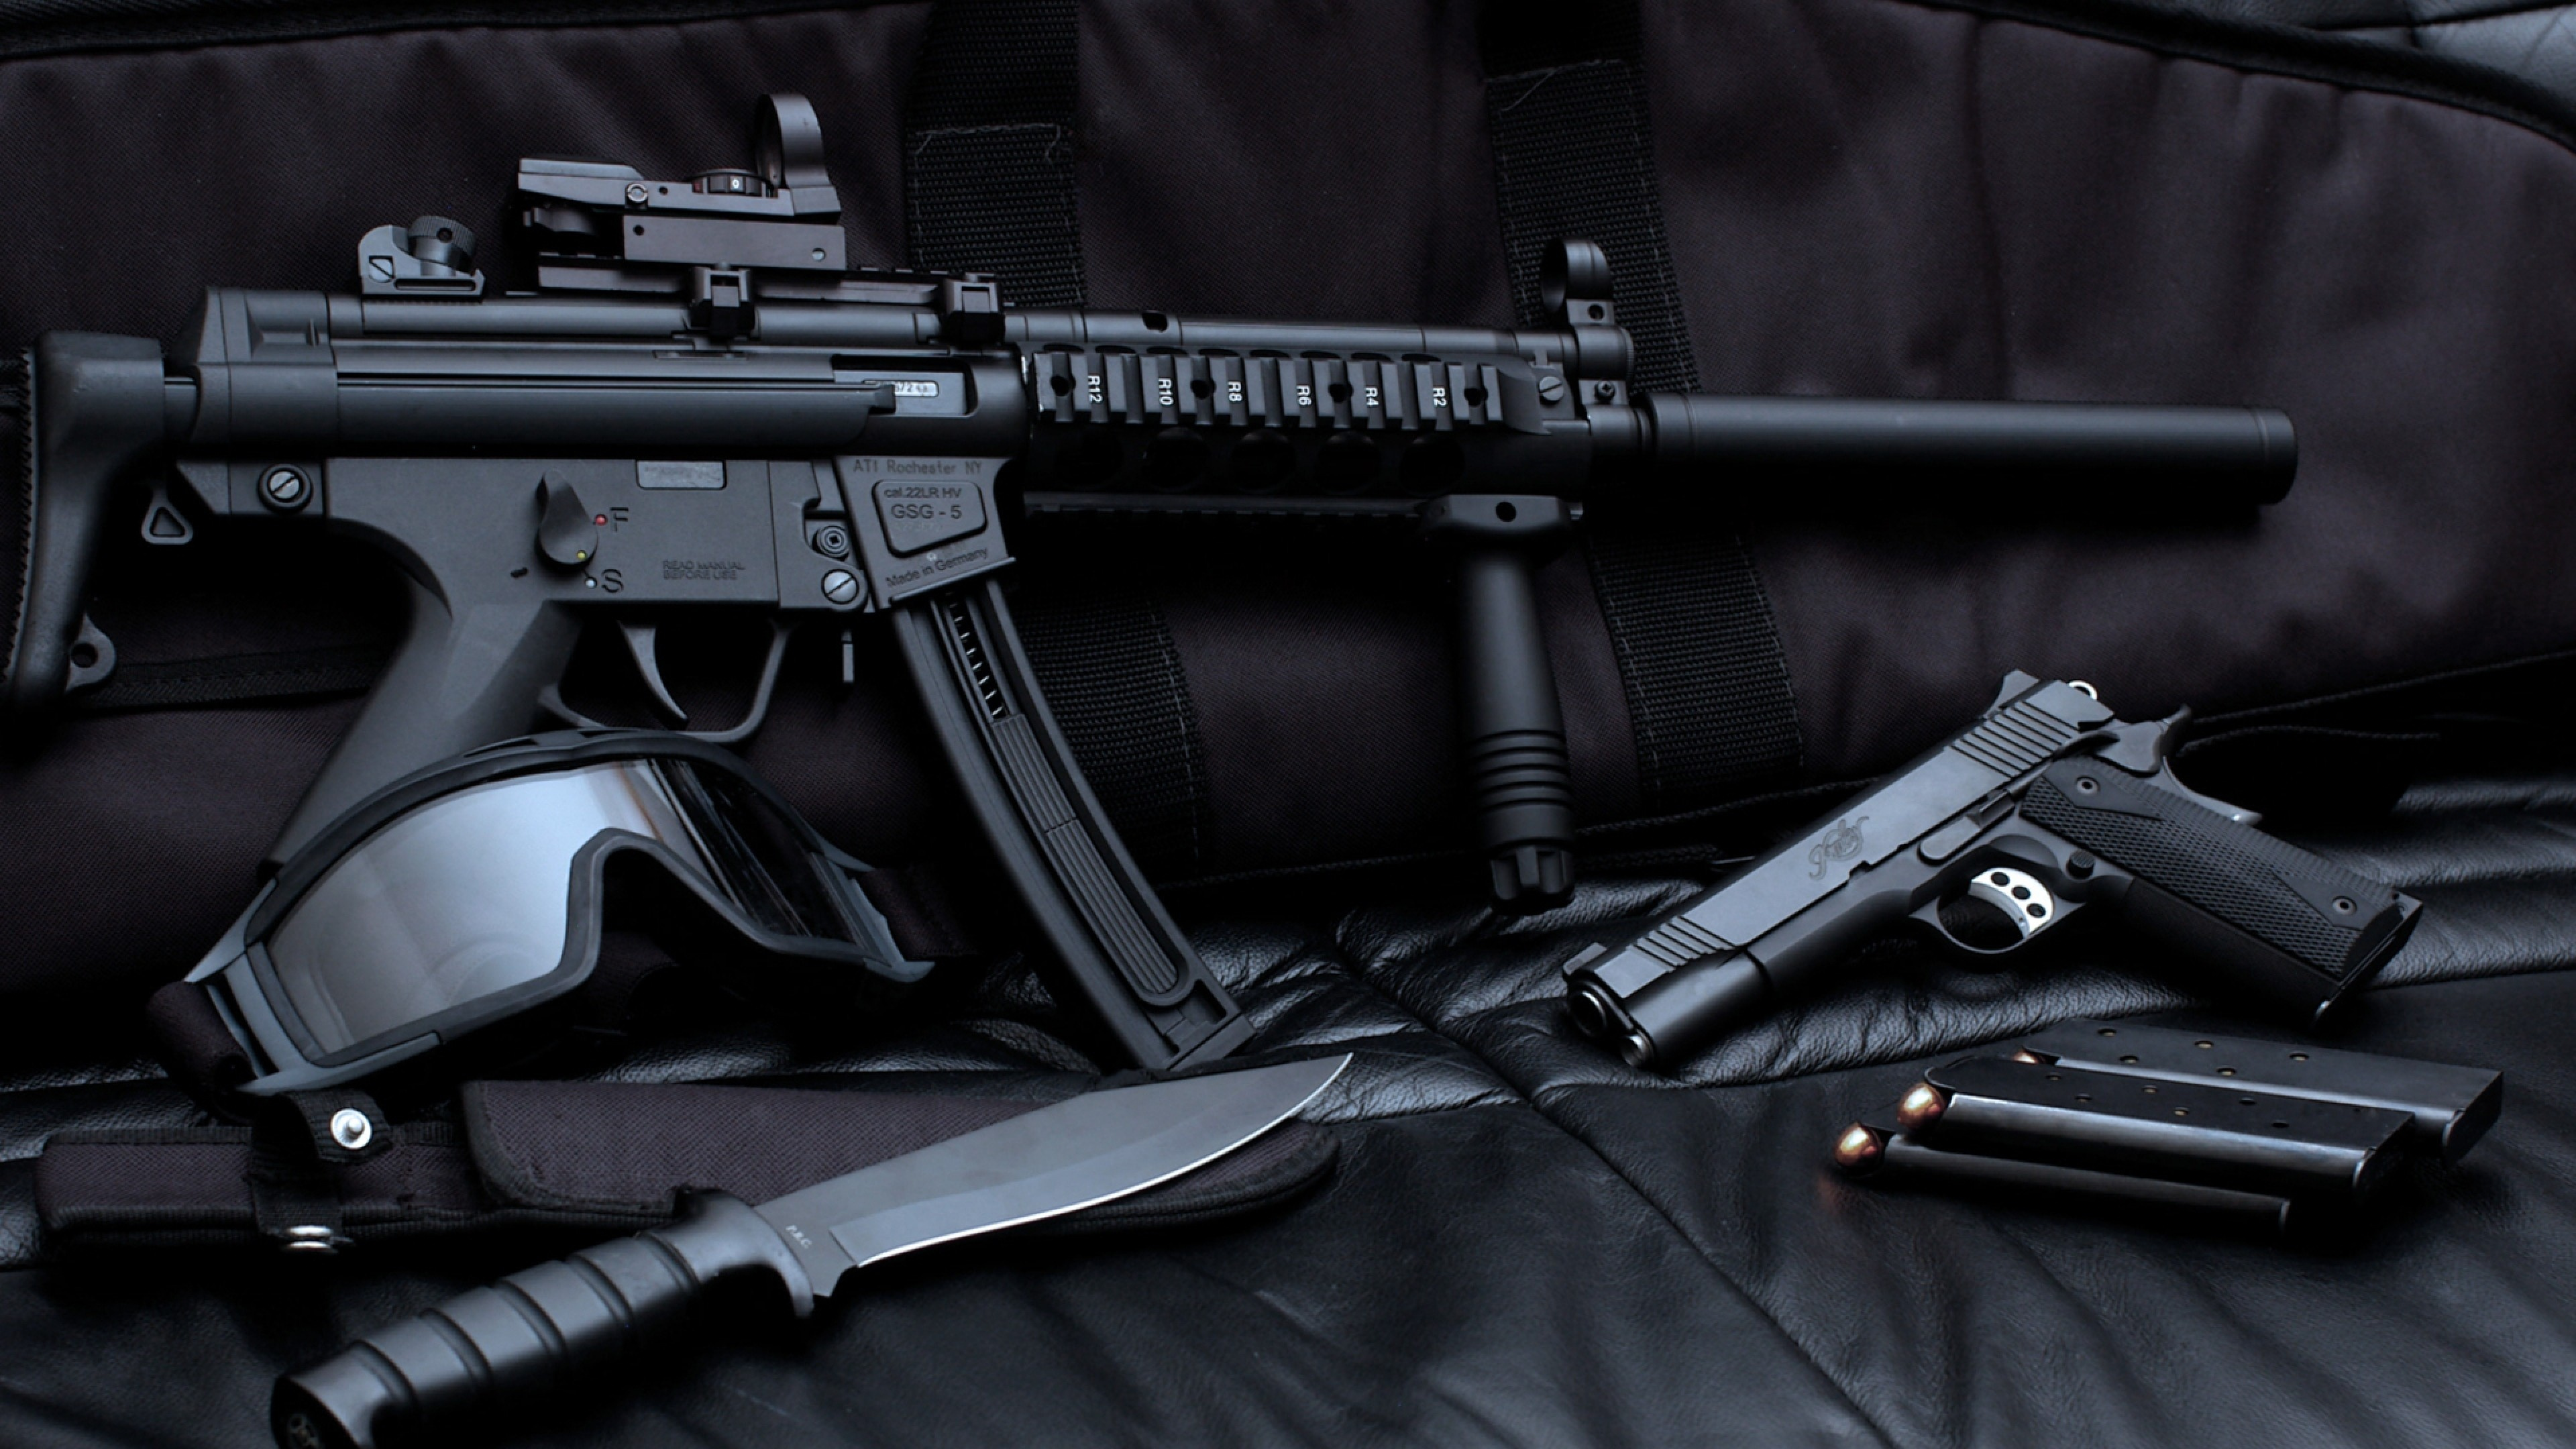 Maschinenpistole, Handfeuerwaffe, Feuerwaffe, Trigger, Gun Barrel. Wallpaper in 3840x2160 Resolution